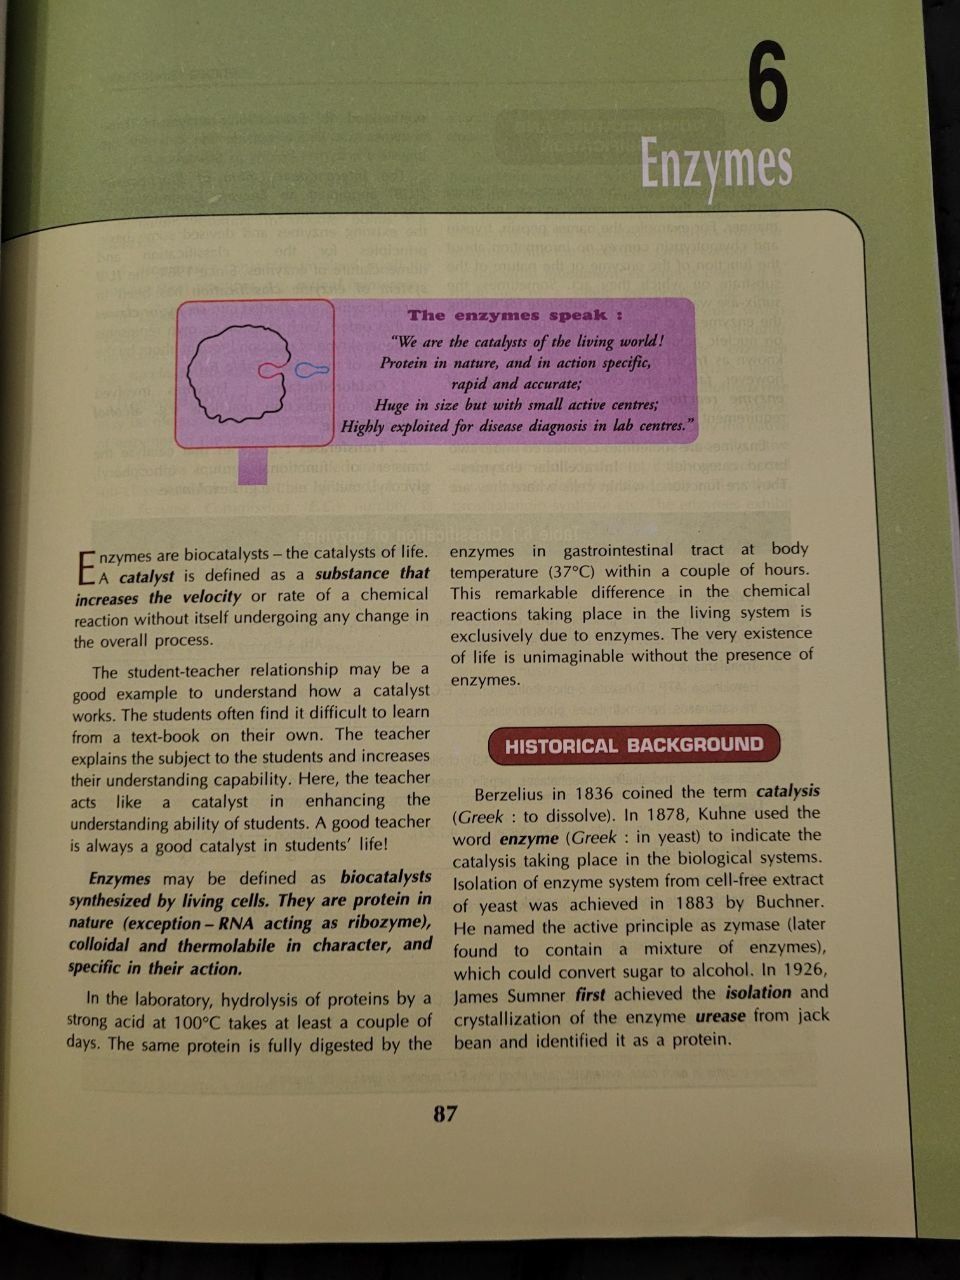 Biochemistry/ Біохімія U. Satyanarayana, U. Chakrapani 5e видання 2018